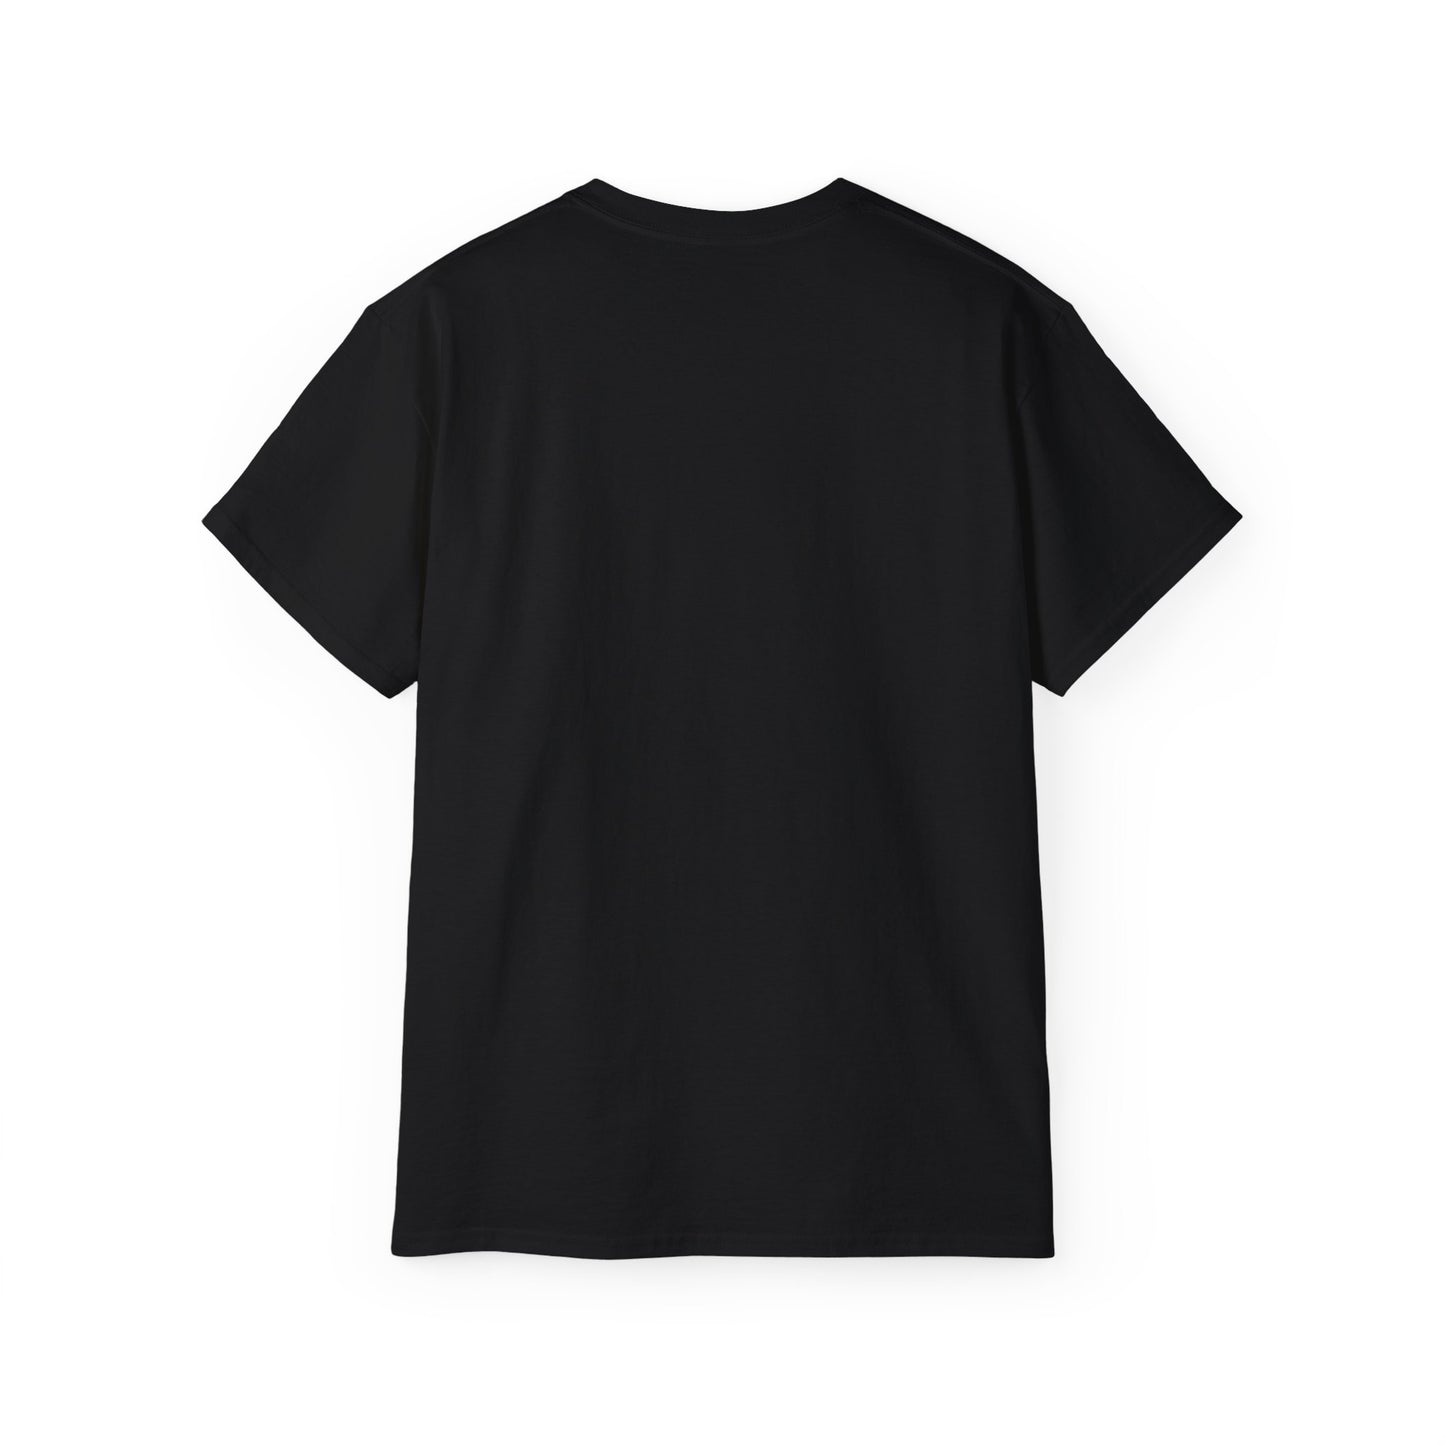 The XP Shirt (Black or Charcoal)